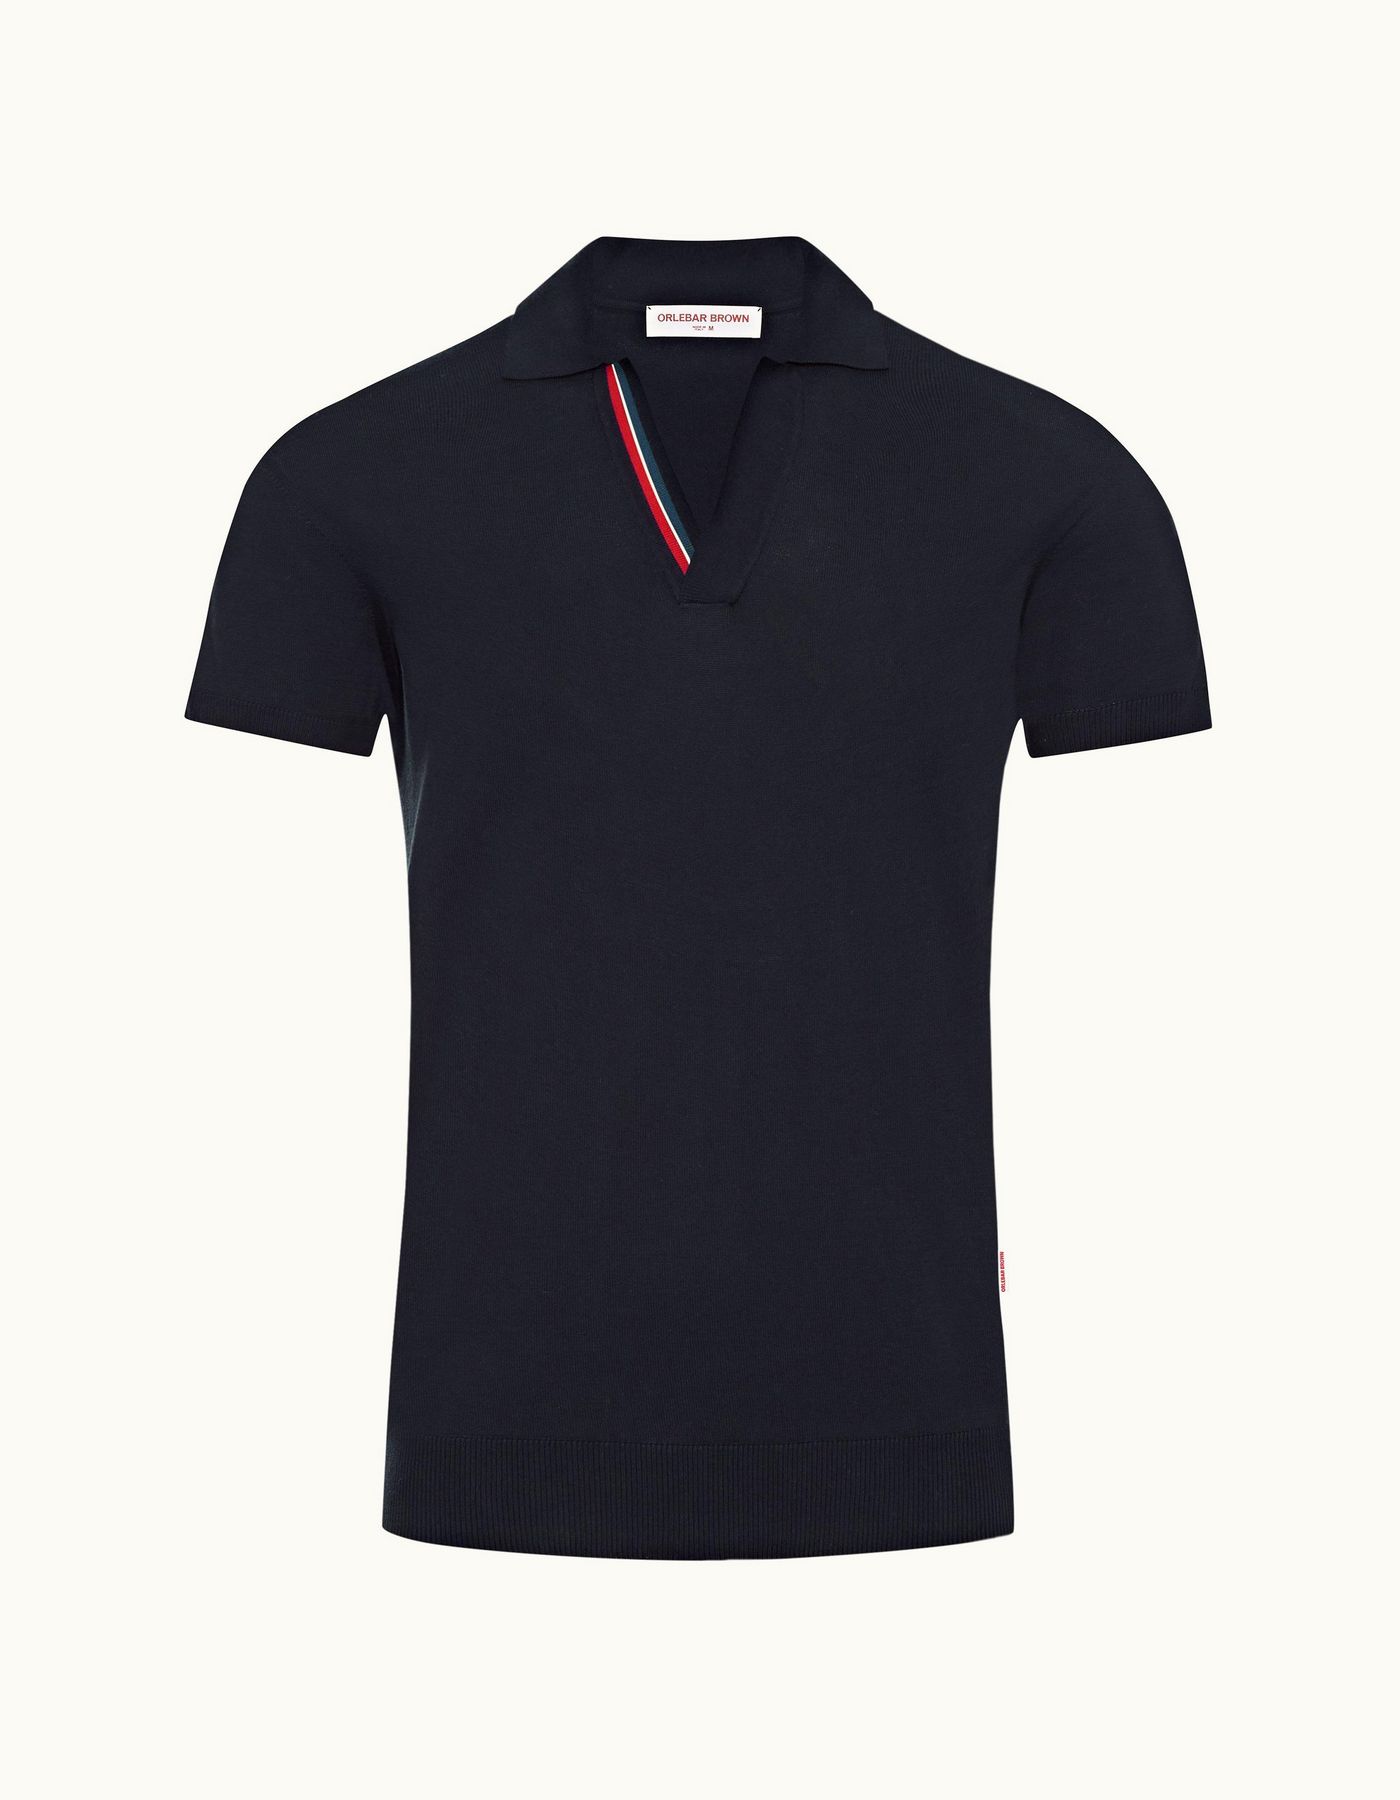 Horton Stripe - Mens Navy Tailored Fit Organic Cotton Polo Shirt